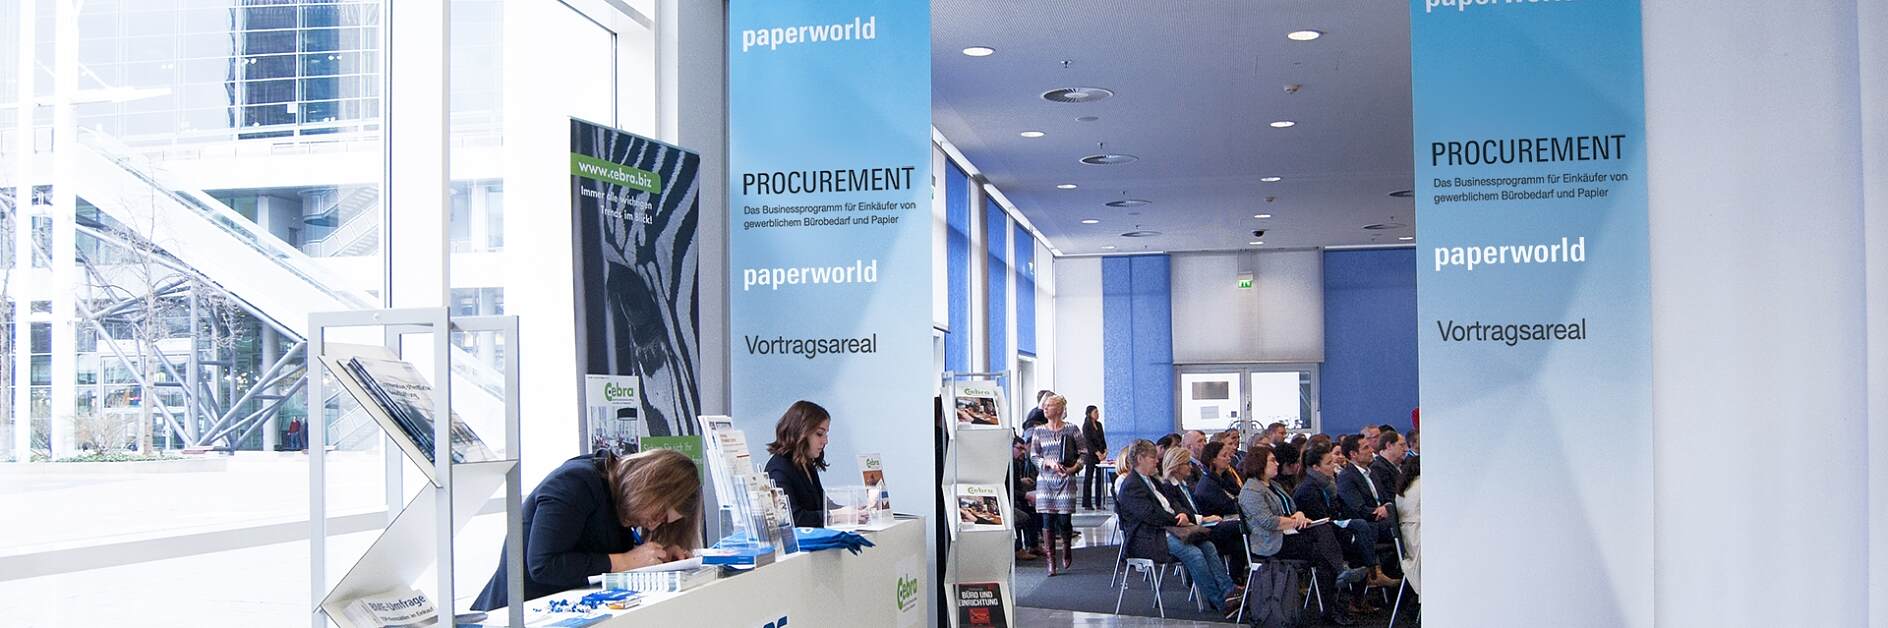 tesa Paperworld Procurement Day 2018